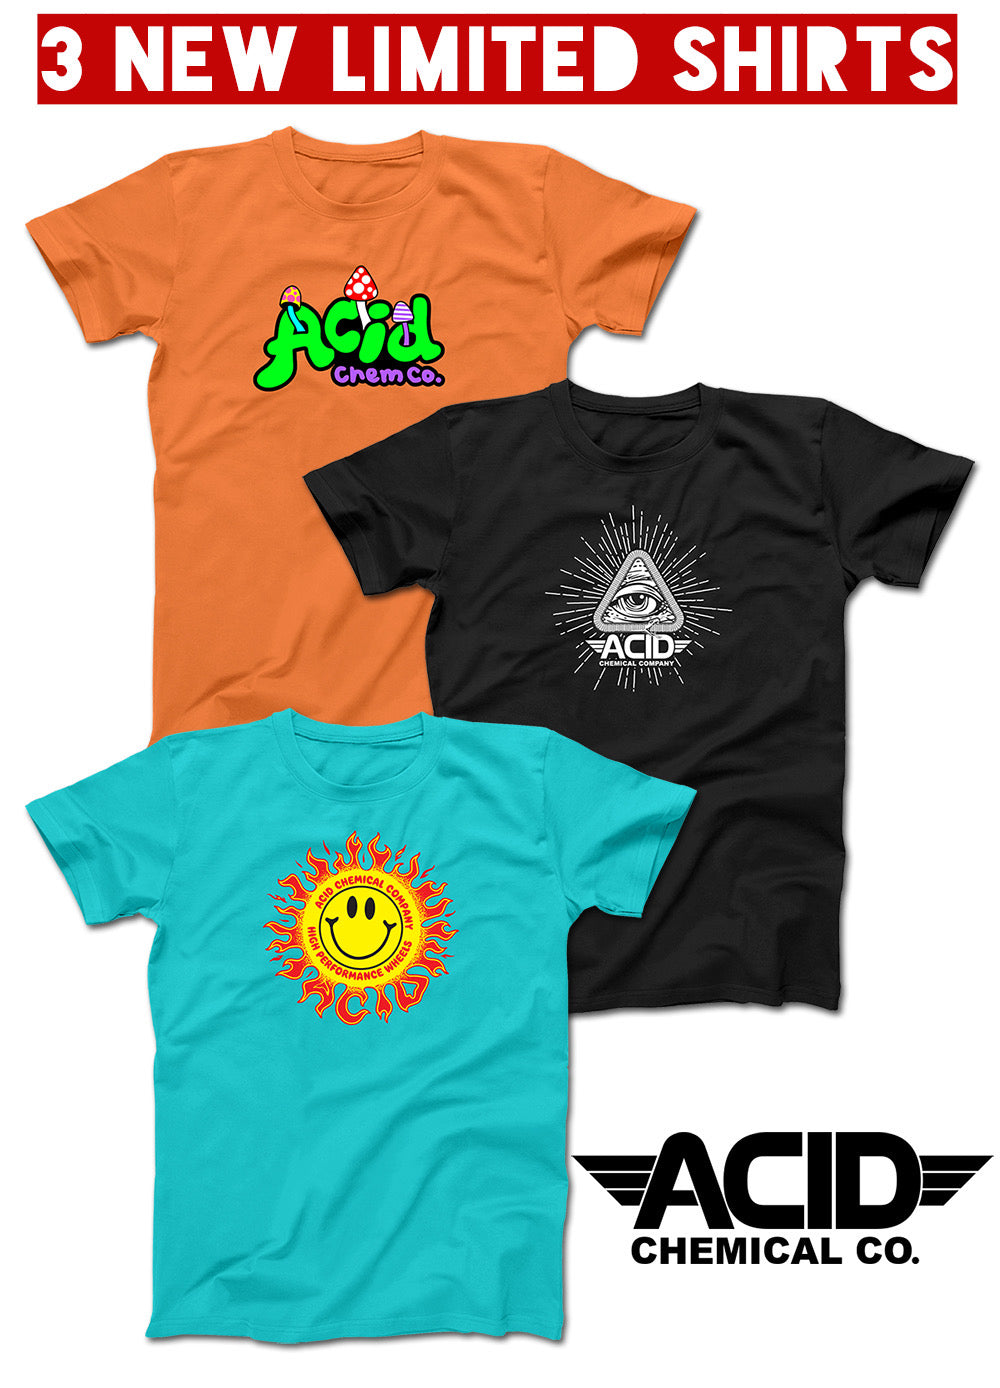 3 new Acid Chemical Co Shirts